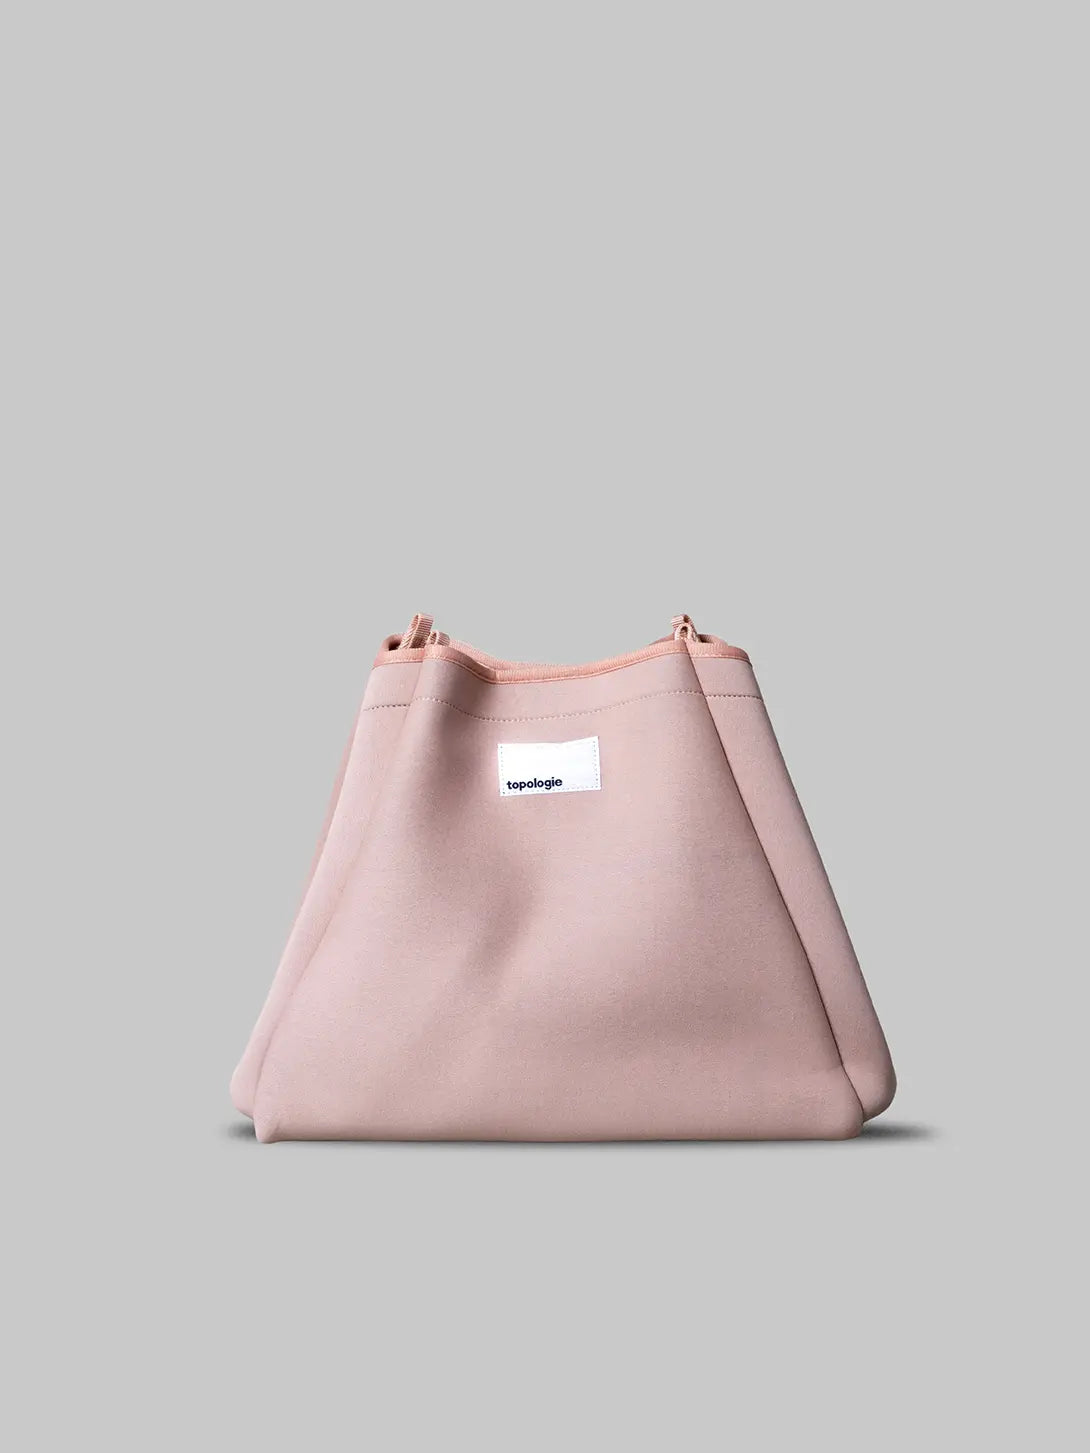 Peach Topologie Loop Shopper Tote Bag